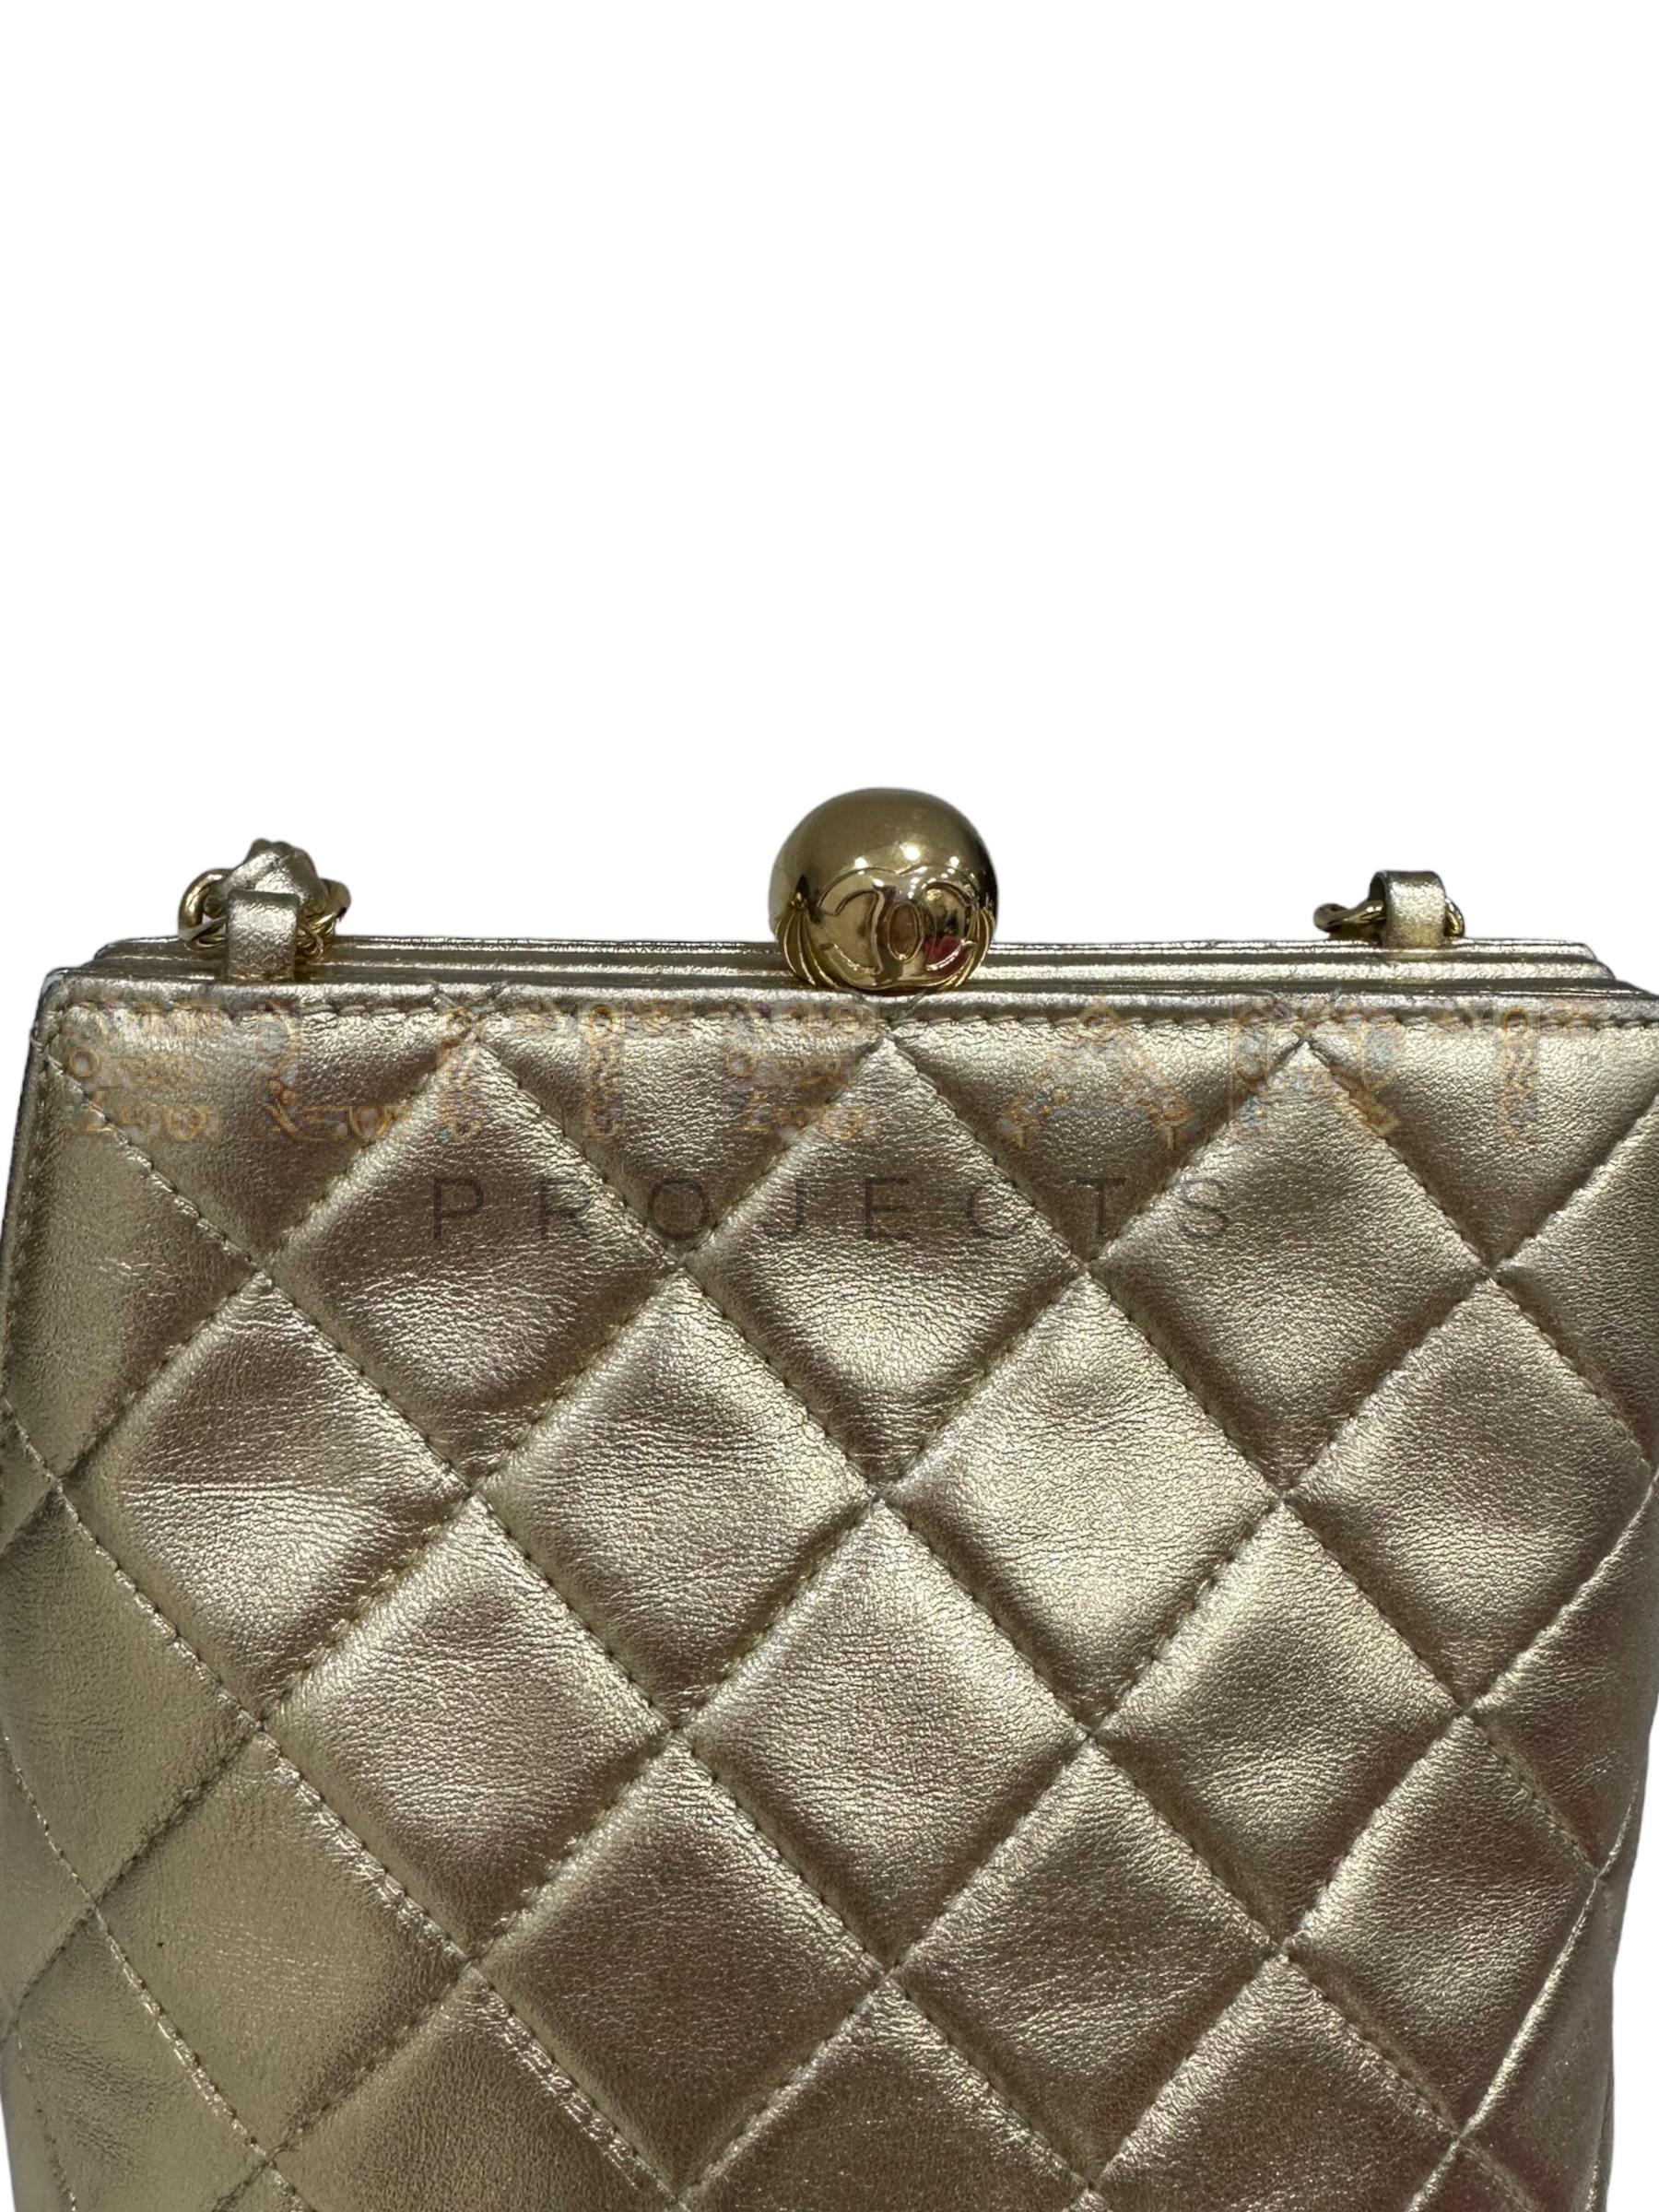 Chanel, vintage, bucket bag, quilted leather, golden hardware